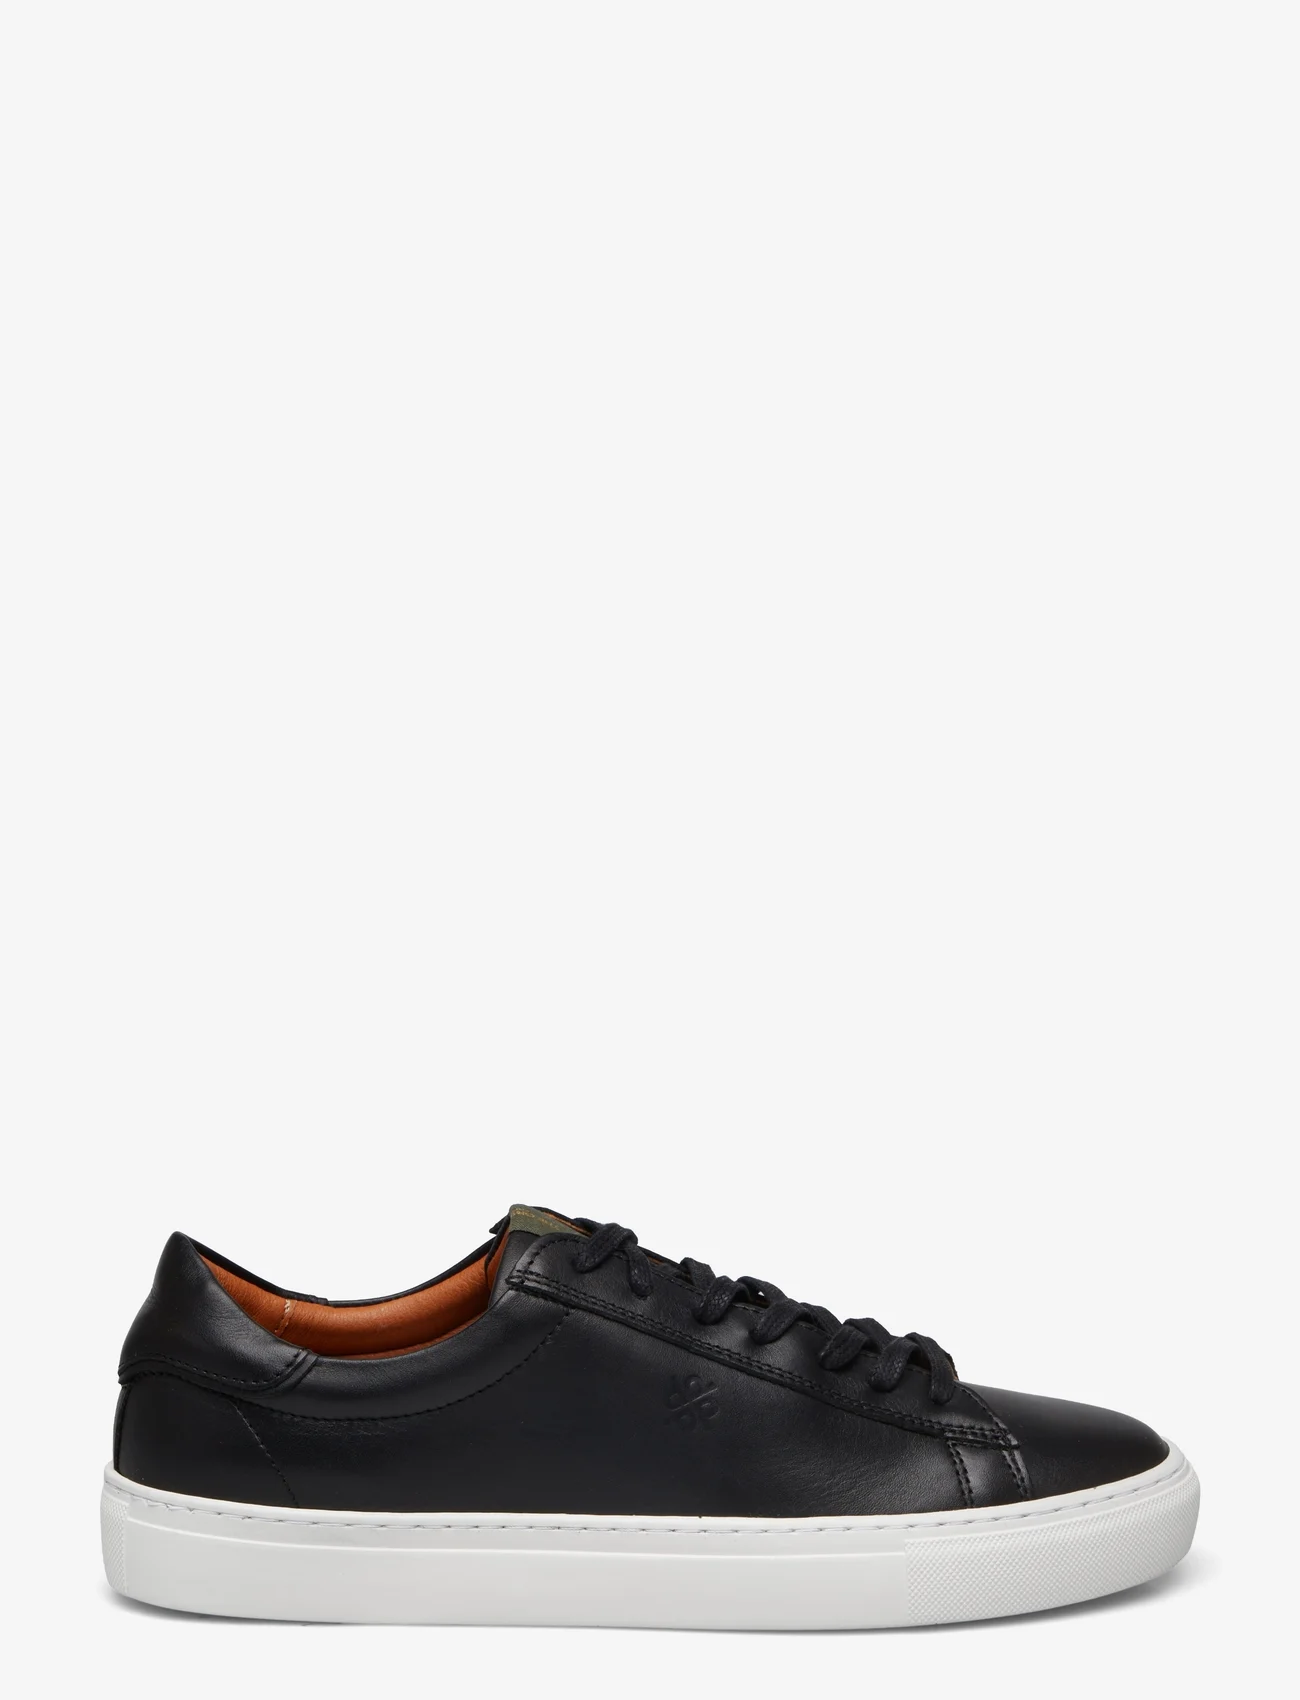 Playboy Footwear - Henri - low tops - black leather - 1